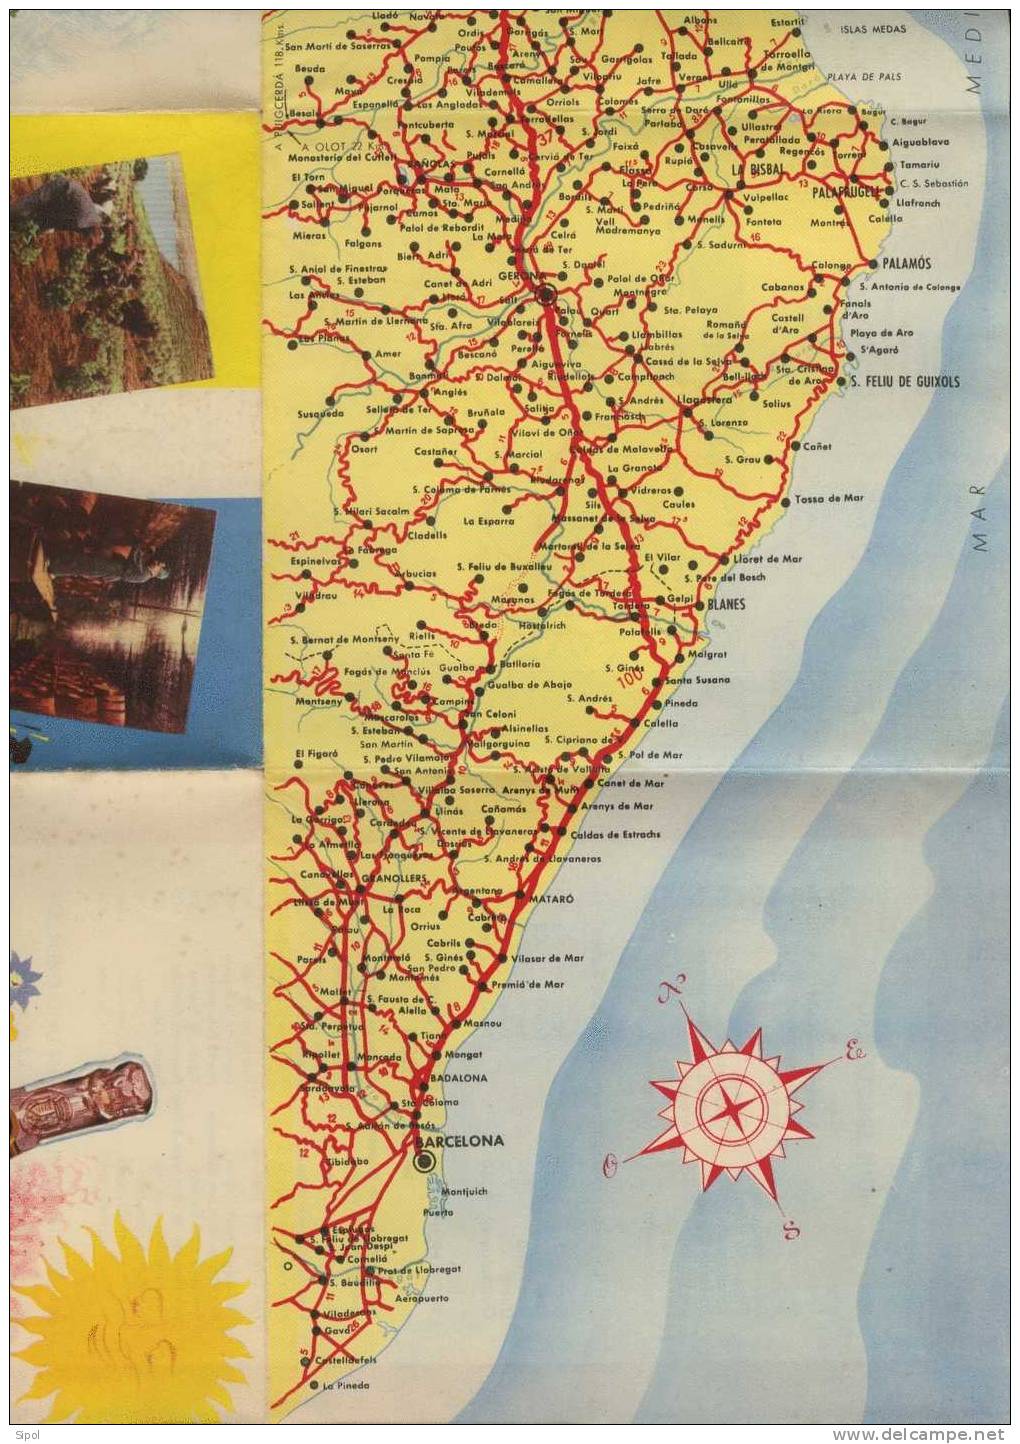 Perelada Bietet Ihnen Ein Willkommen - Prospectus Touristique De 41 X 32 Cm Avec Carte ( 1957) - Spain